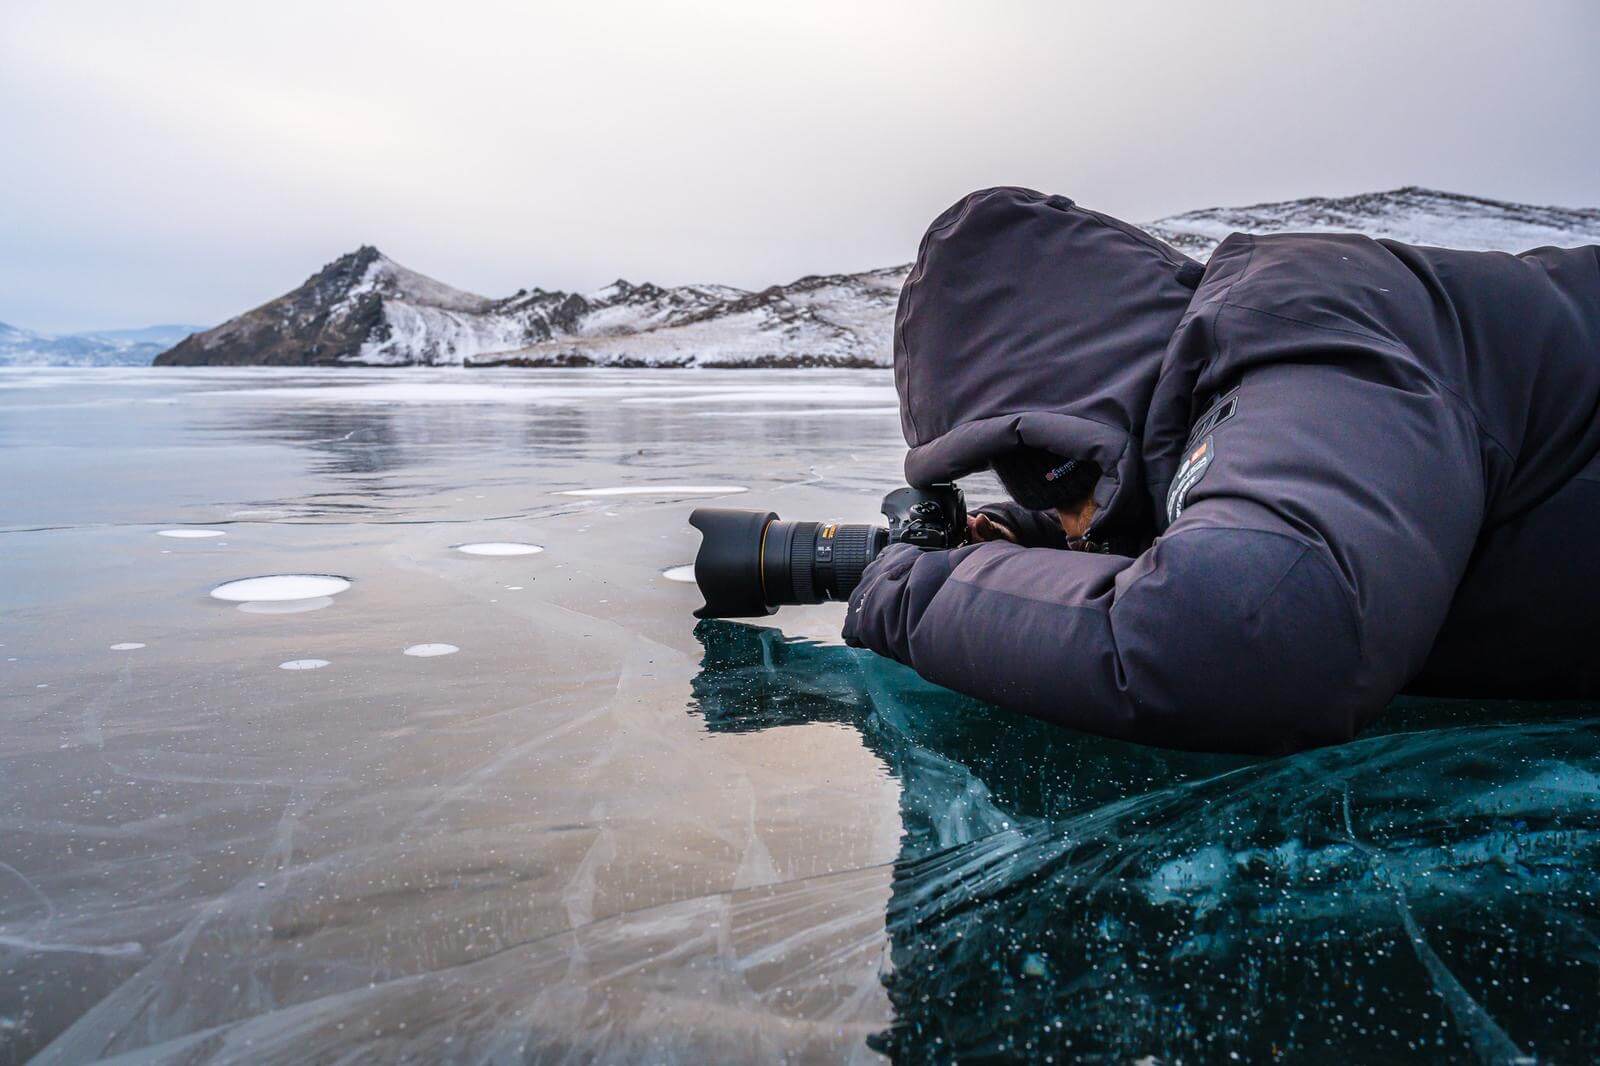 Sivani photographing the ice of Lake Baikal in Siberia.